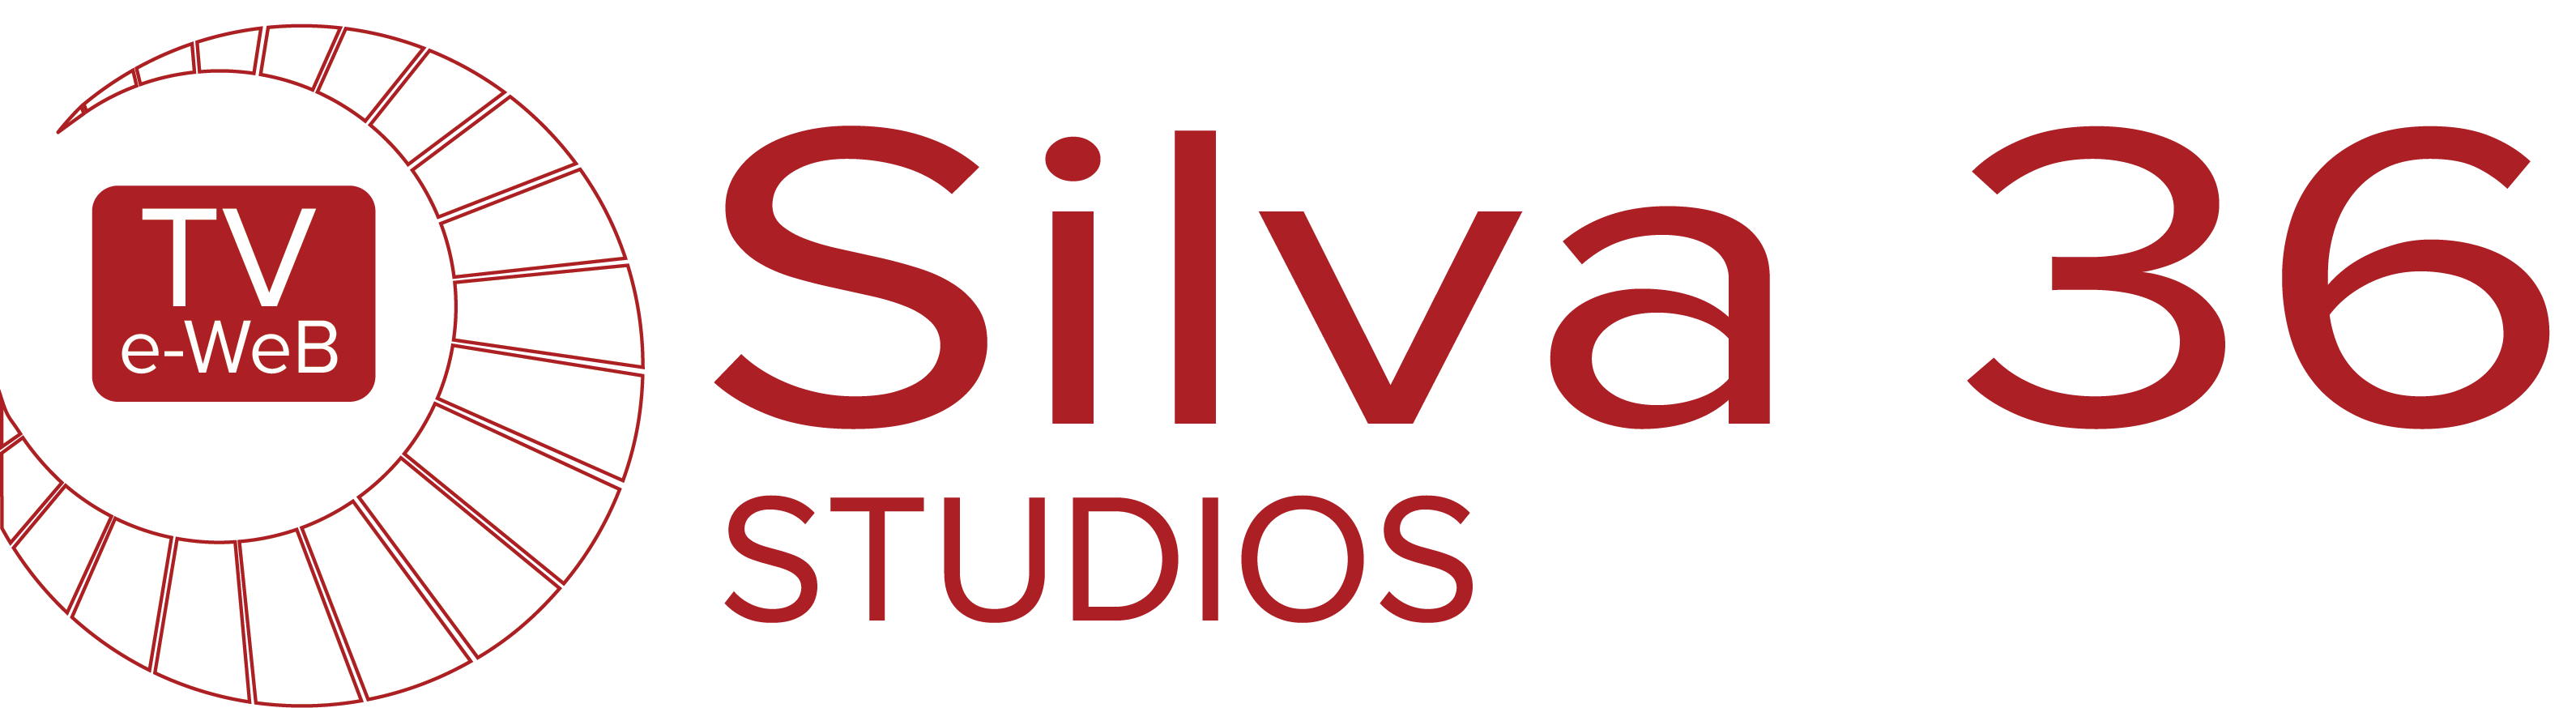 Silva36 STUDIOS